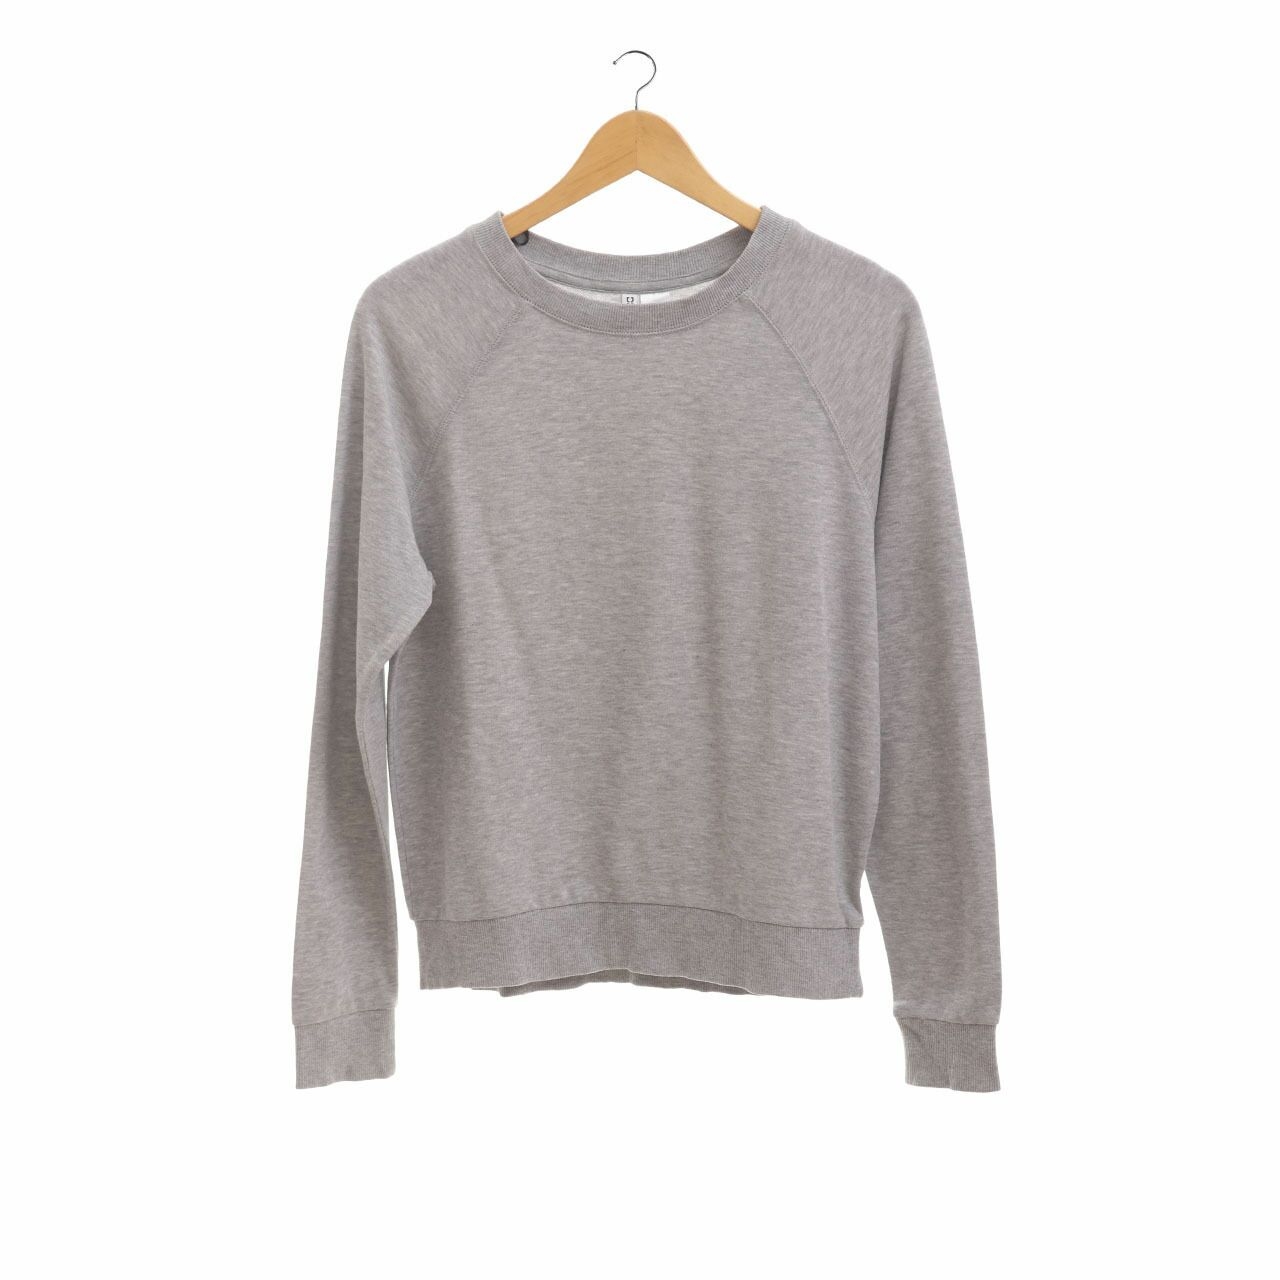 H&M Grey Sweatshirt 